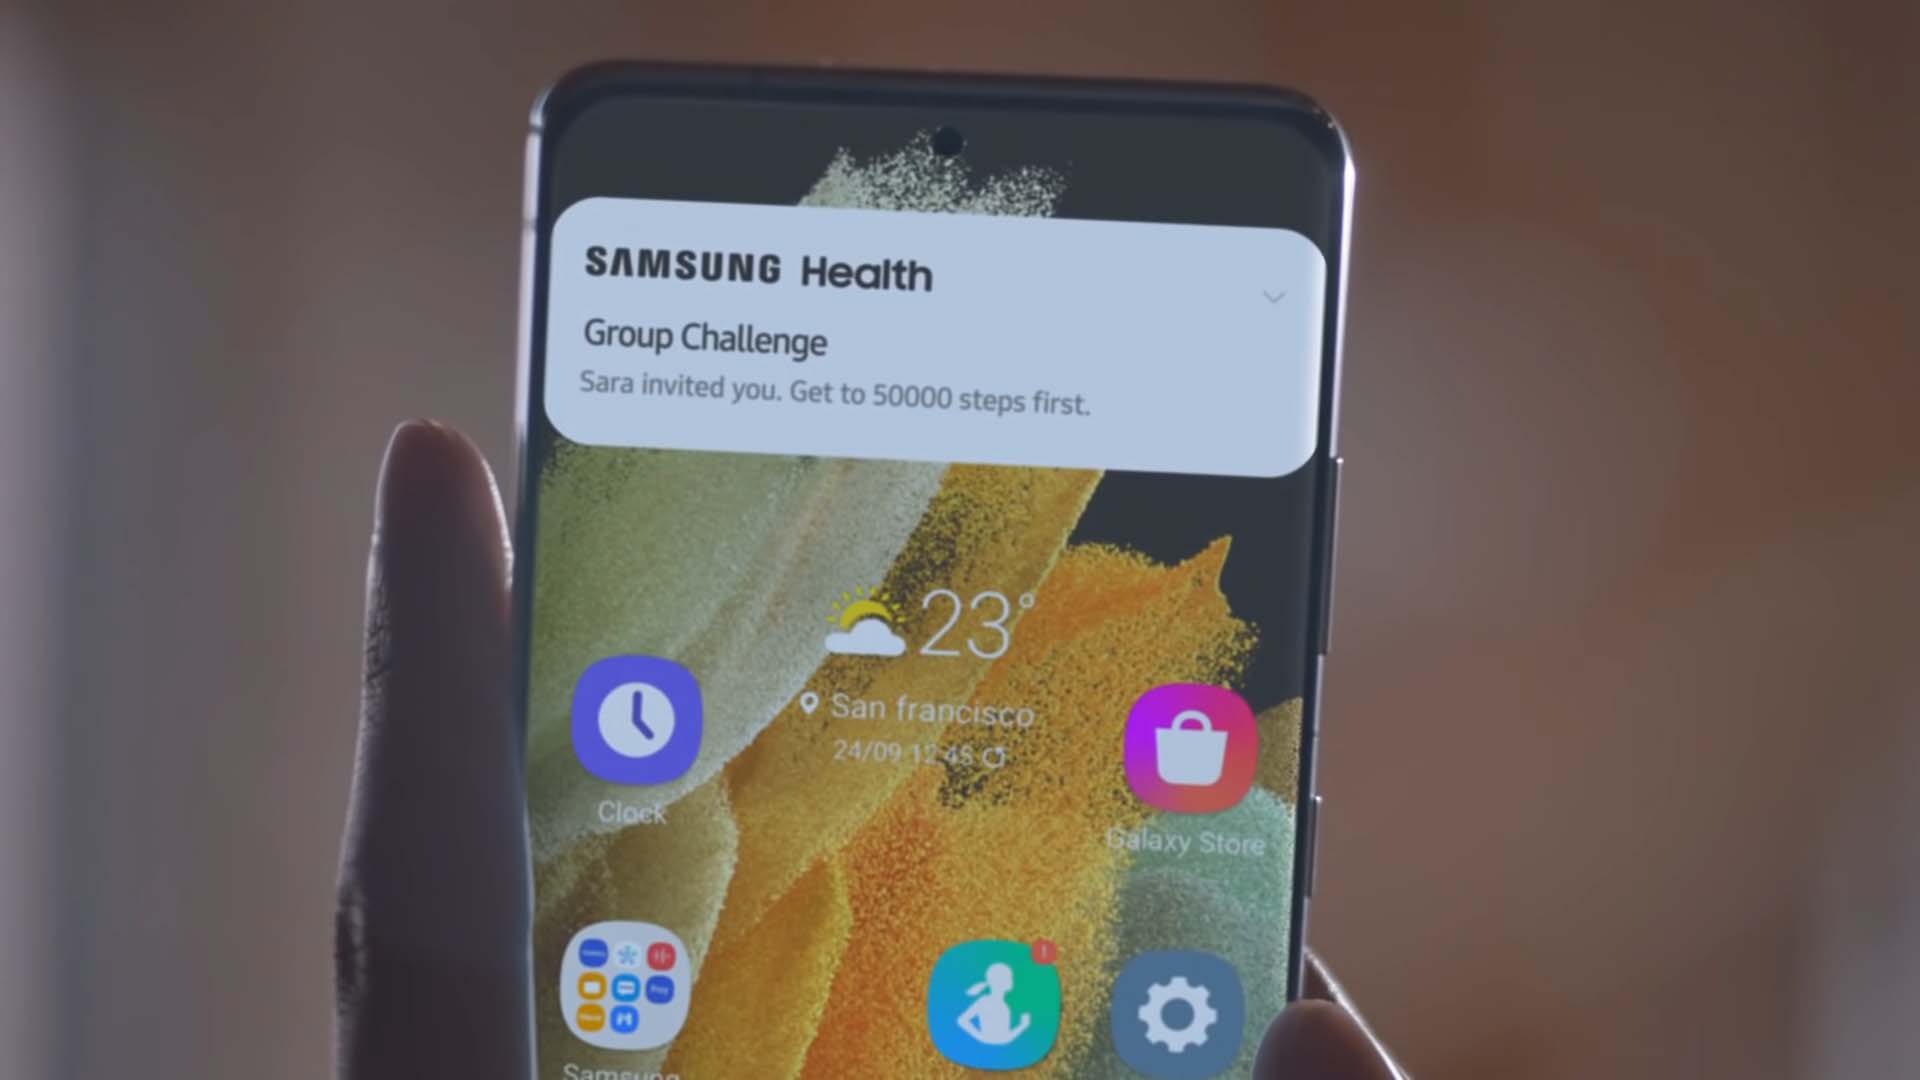 https://www.sammobile.com/wp-content/uploads/2021/11/Samsung-Health.jpg